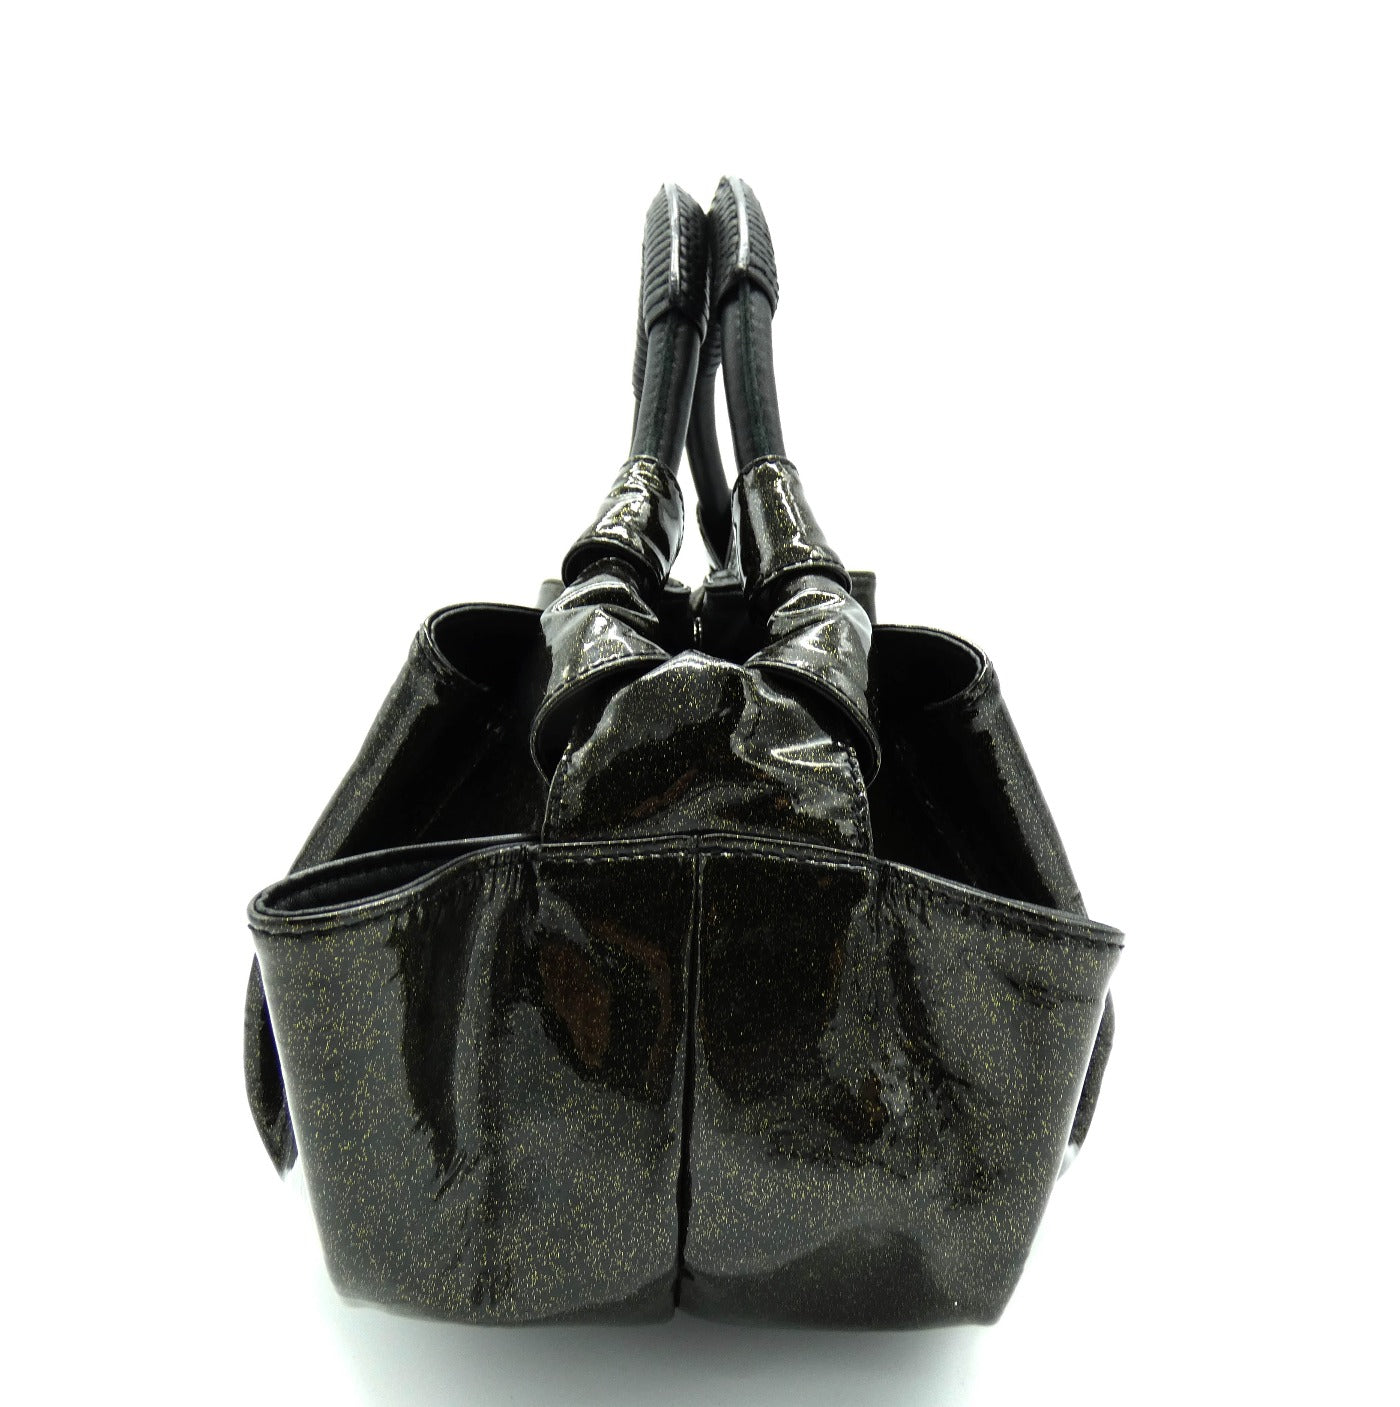 LOEWE Black Patent Leather Aire Bag Handbag LOEWE